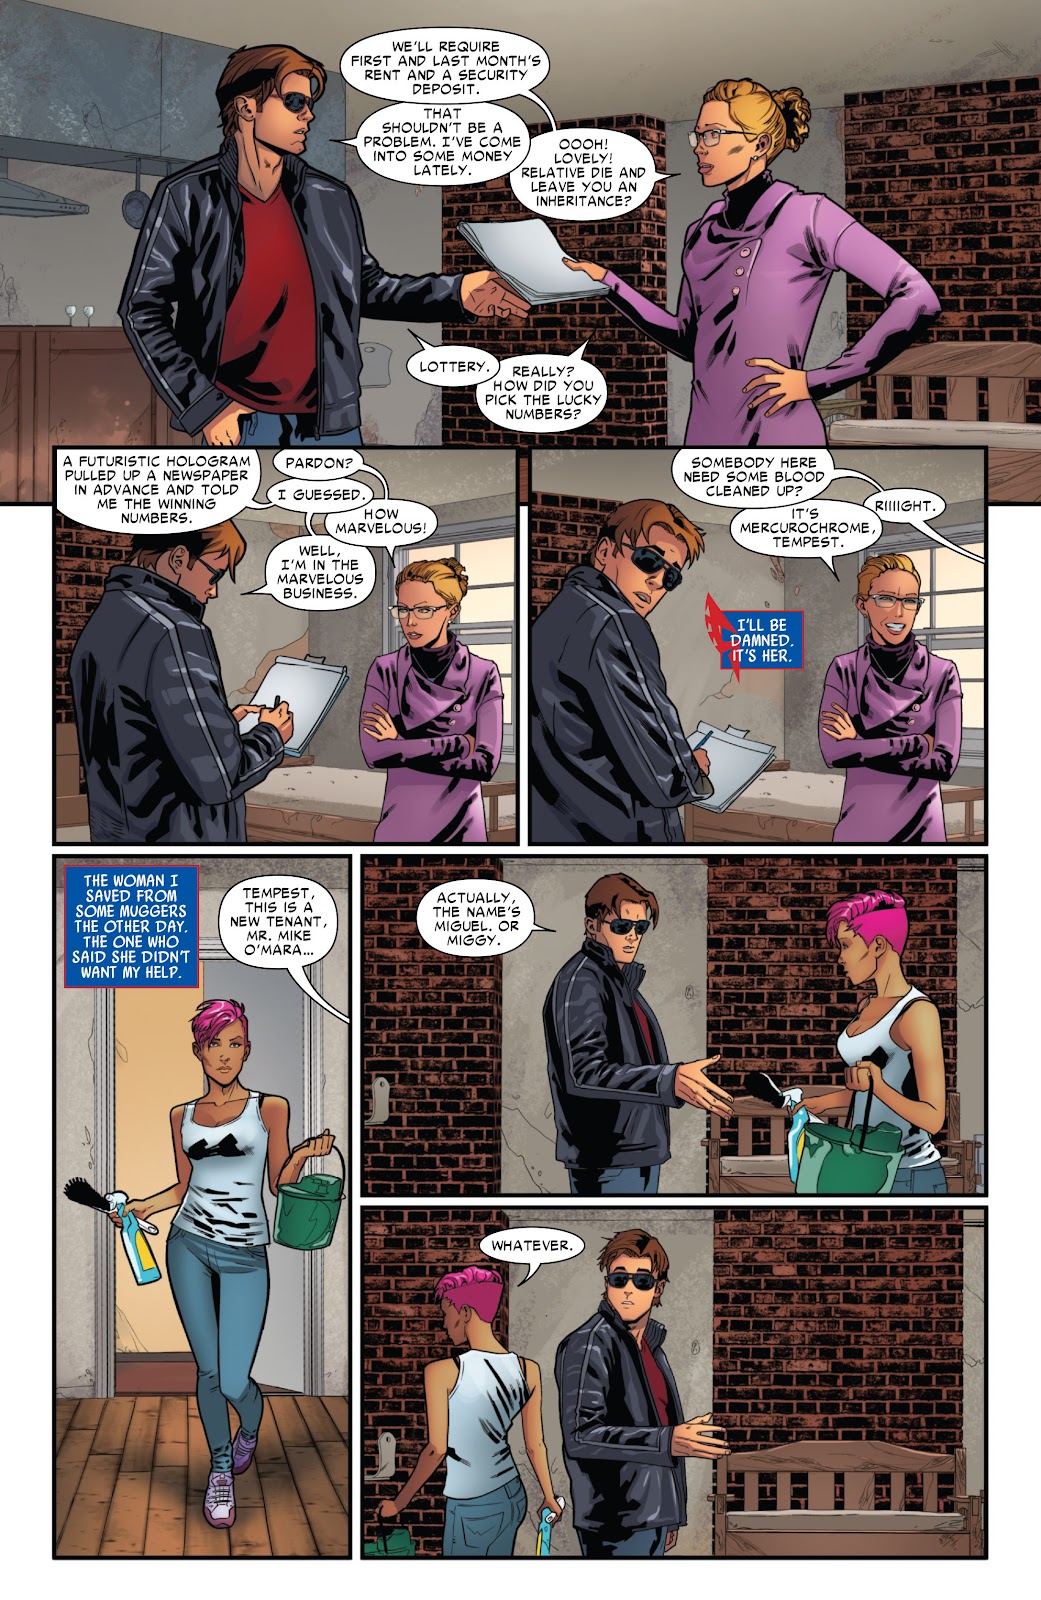 Spider-Man 2099 (2014) issue 1 - Page 6